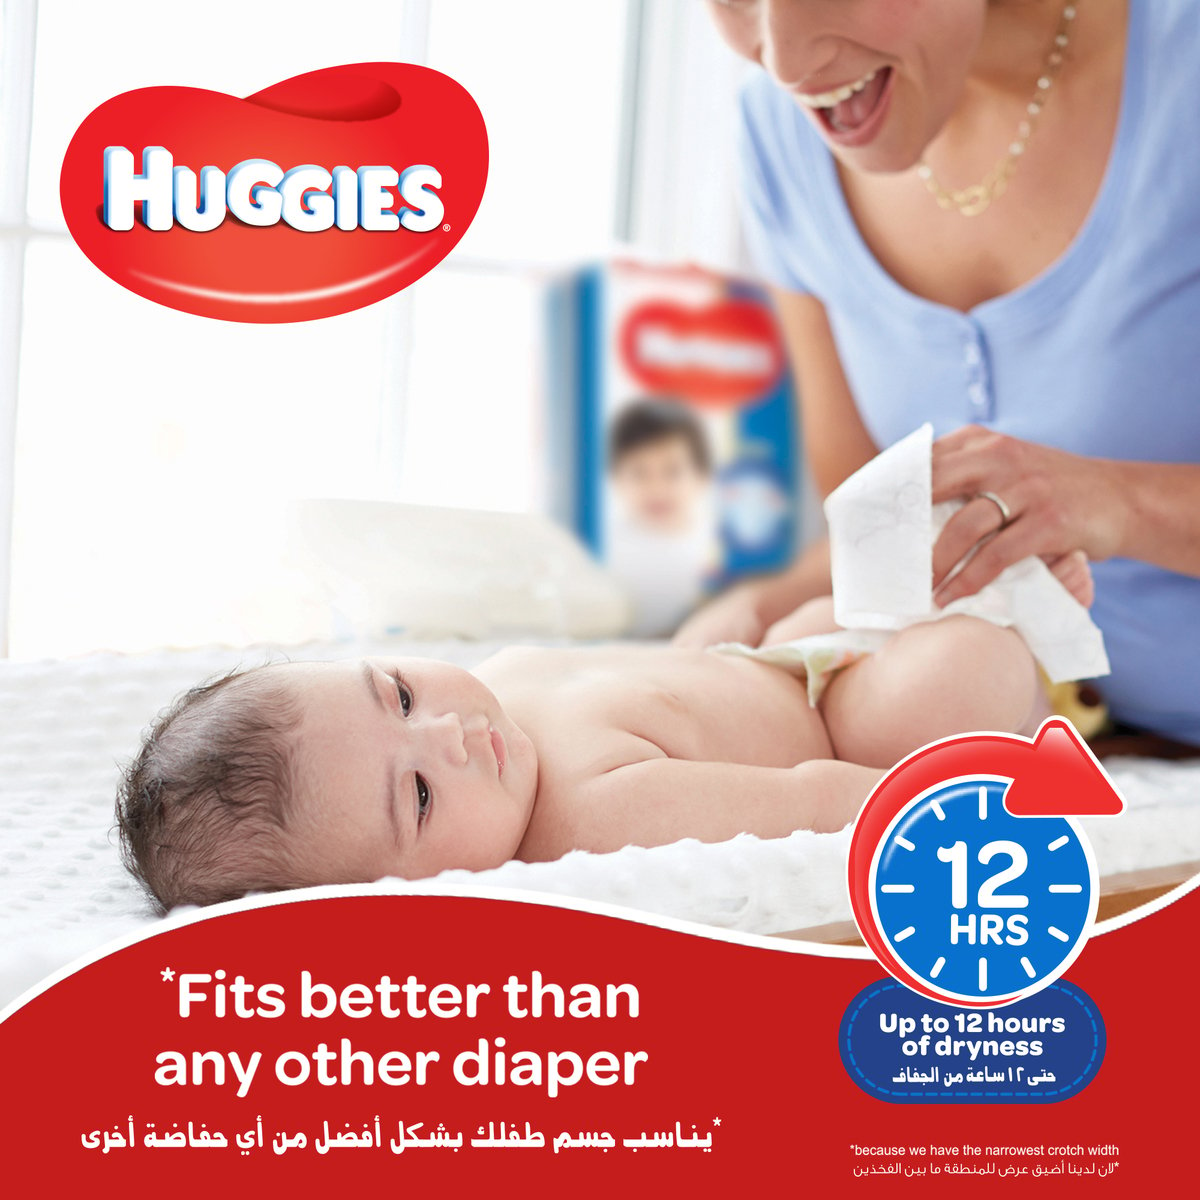 Huggies Diaper Size 5, Junior 12-25kg 40pcs